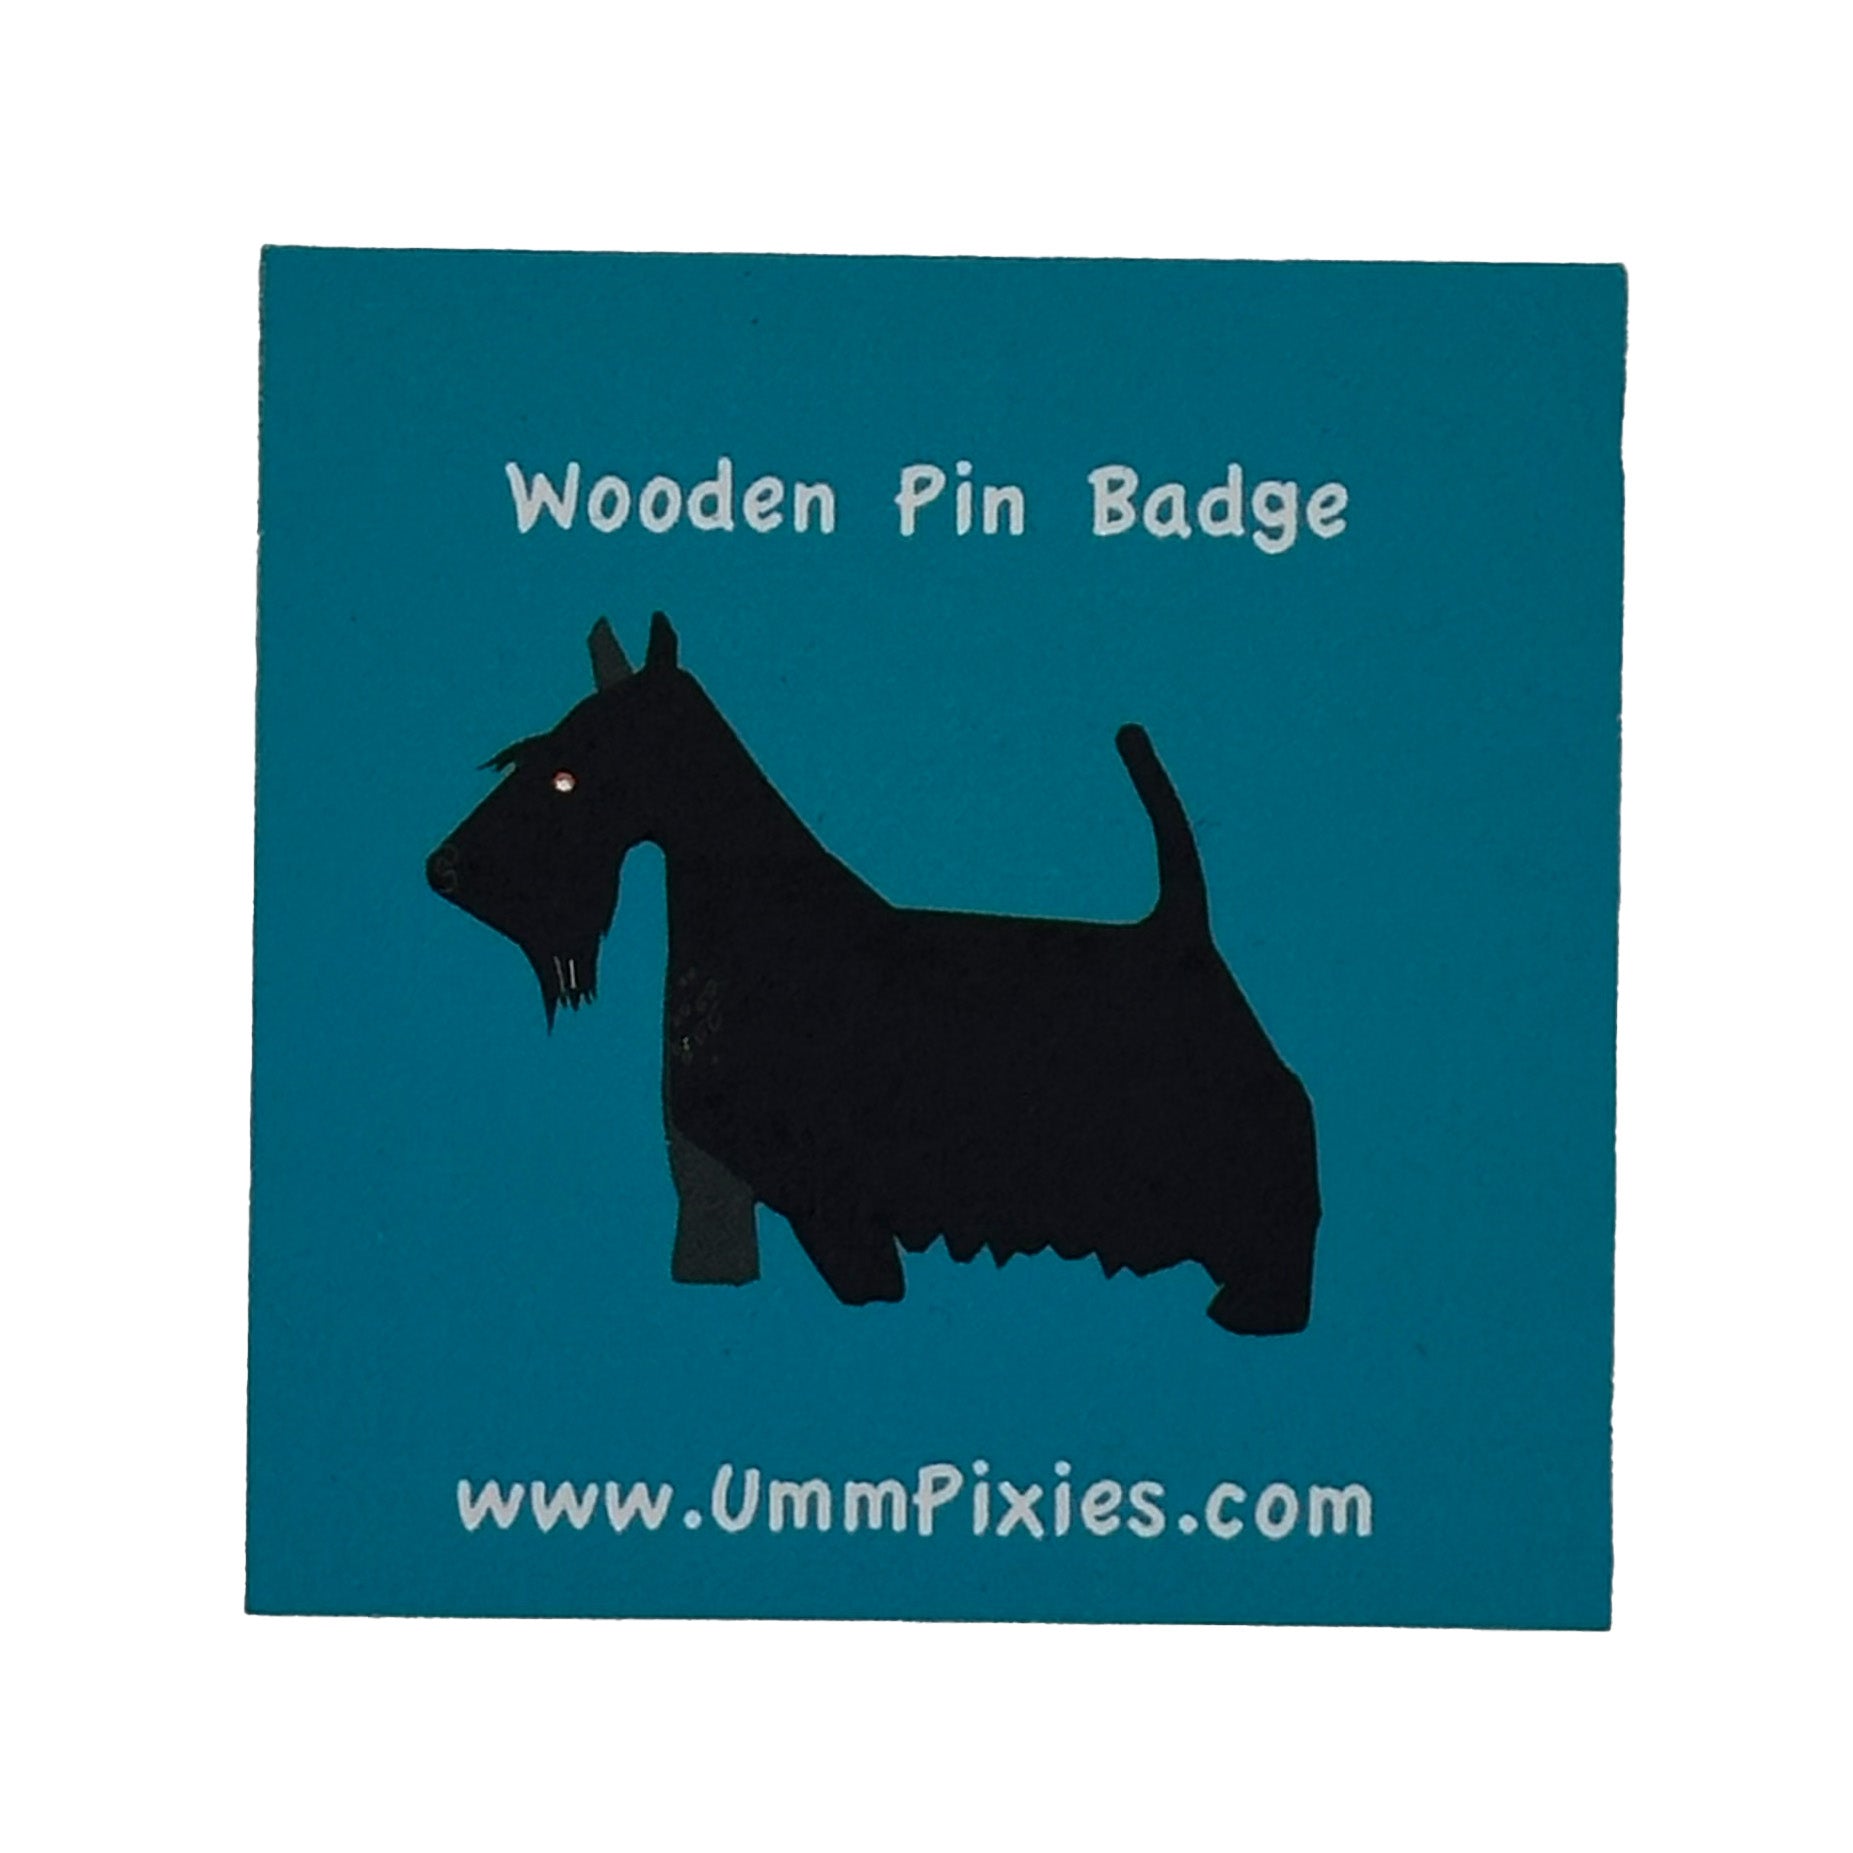 Scottish Terrier Wooden pin badge display card